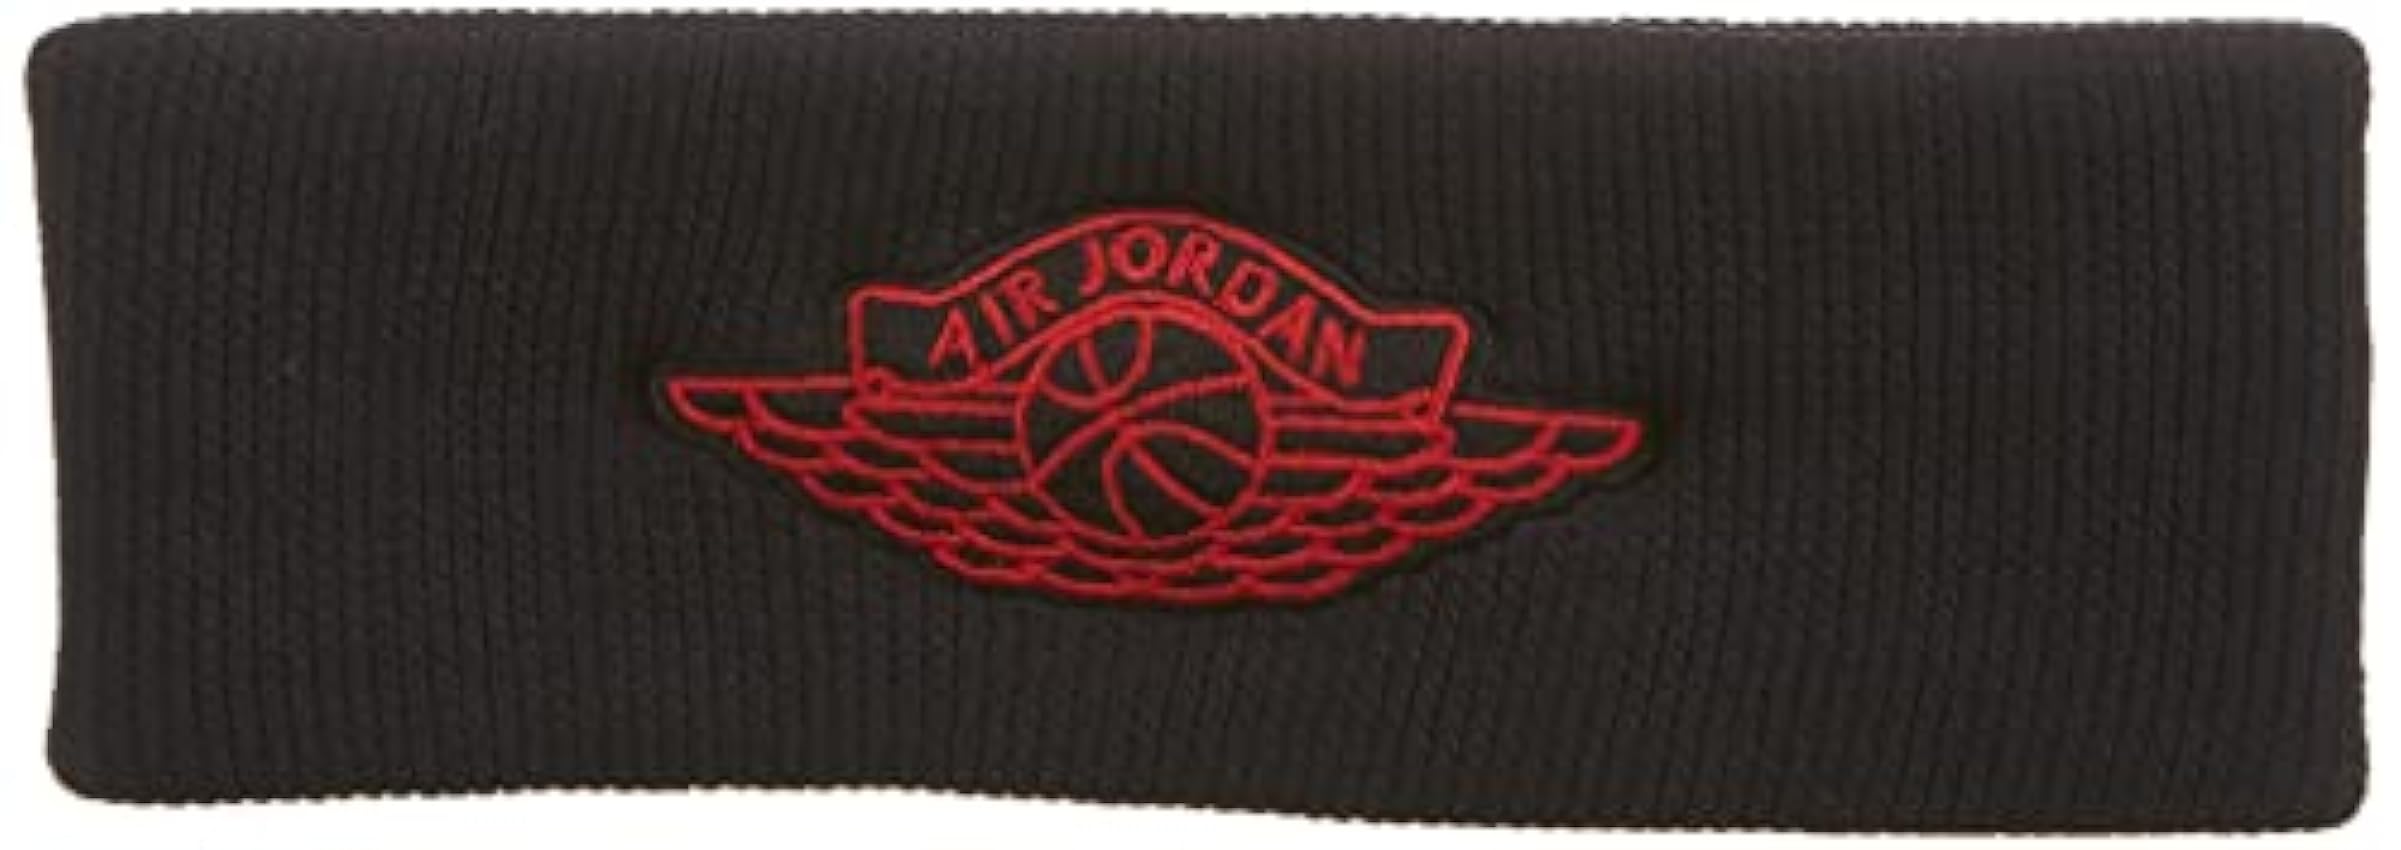 Jordan Wings Headband 2.0 Cinta para la Cabeza, Unisex Adulto, blared, Talla Única Vt4V7a79